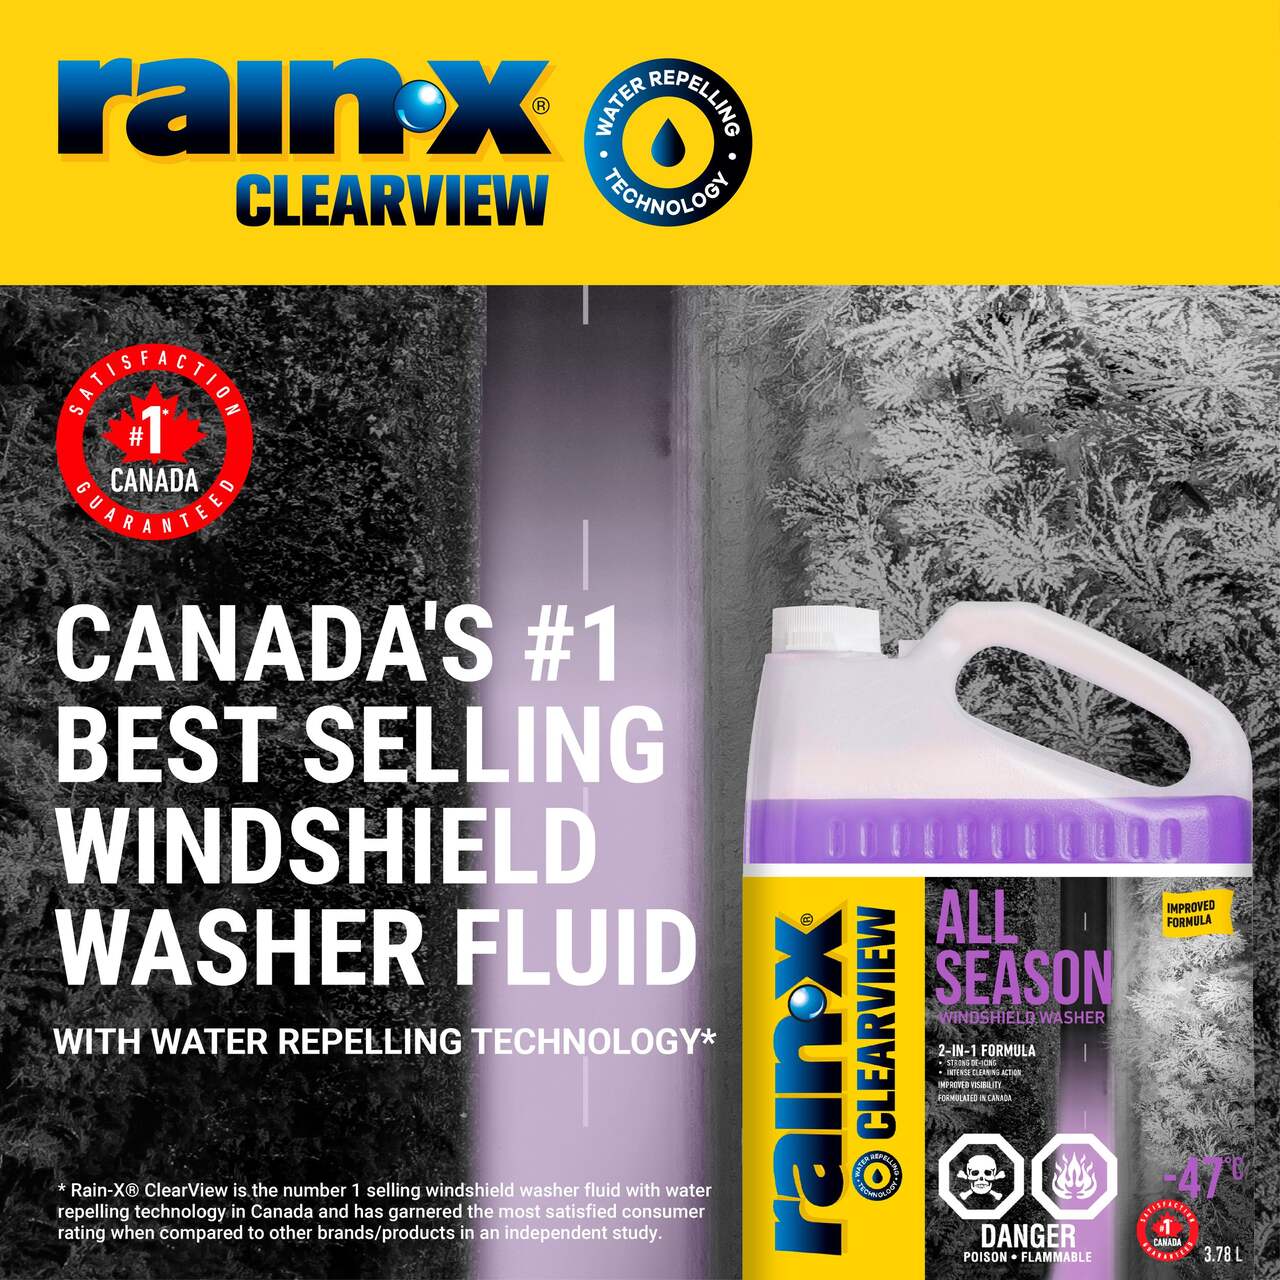 All Season - Windshield Washer Fluid - Rain-X Clearview